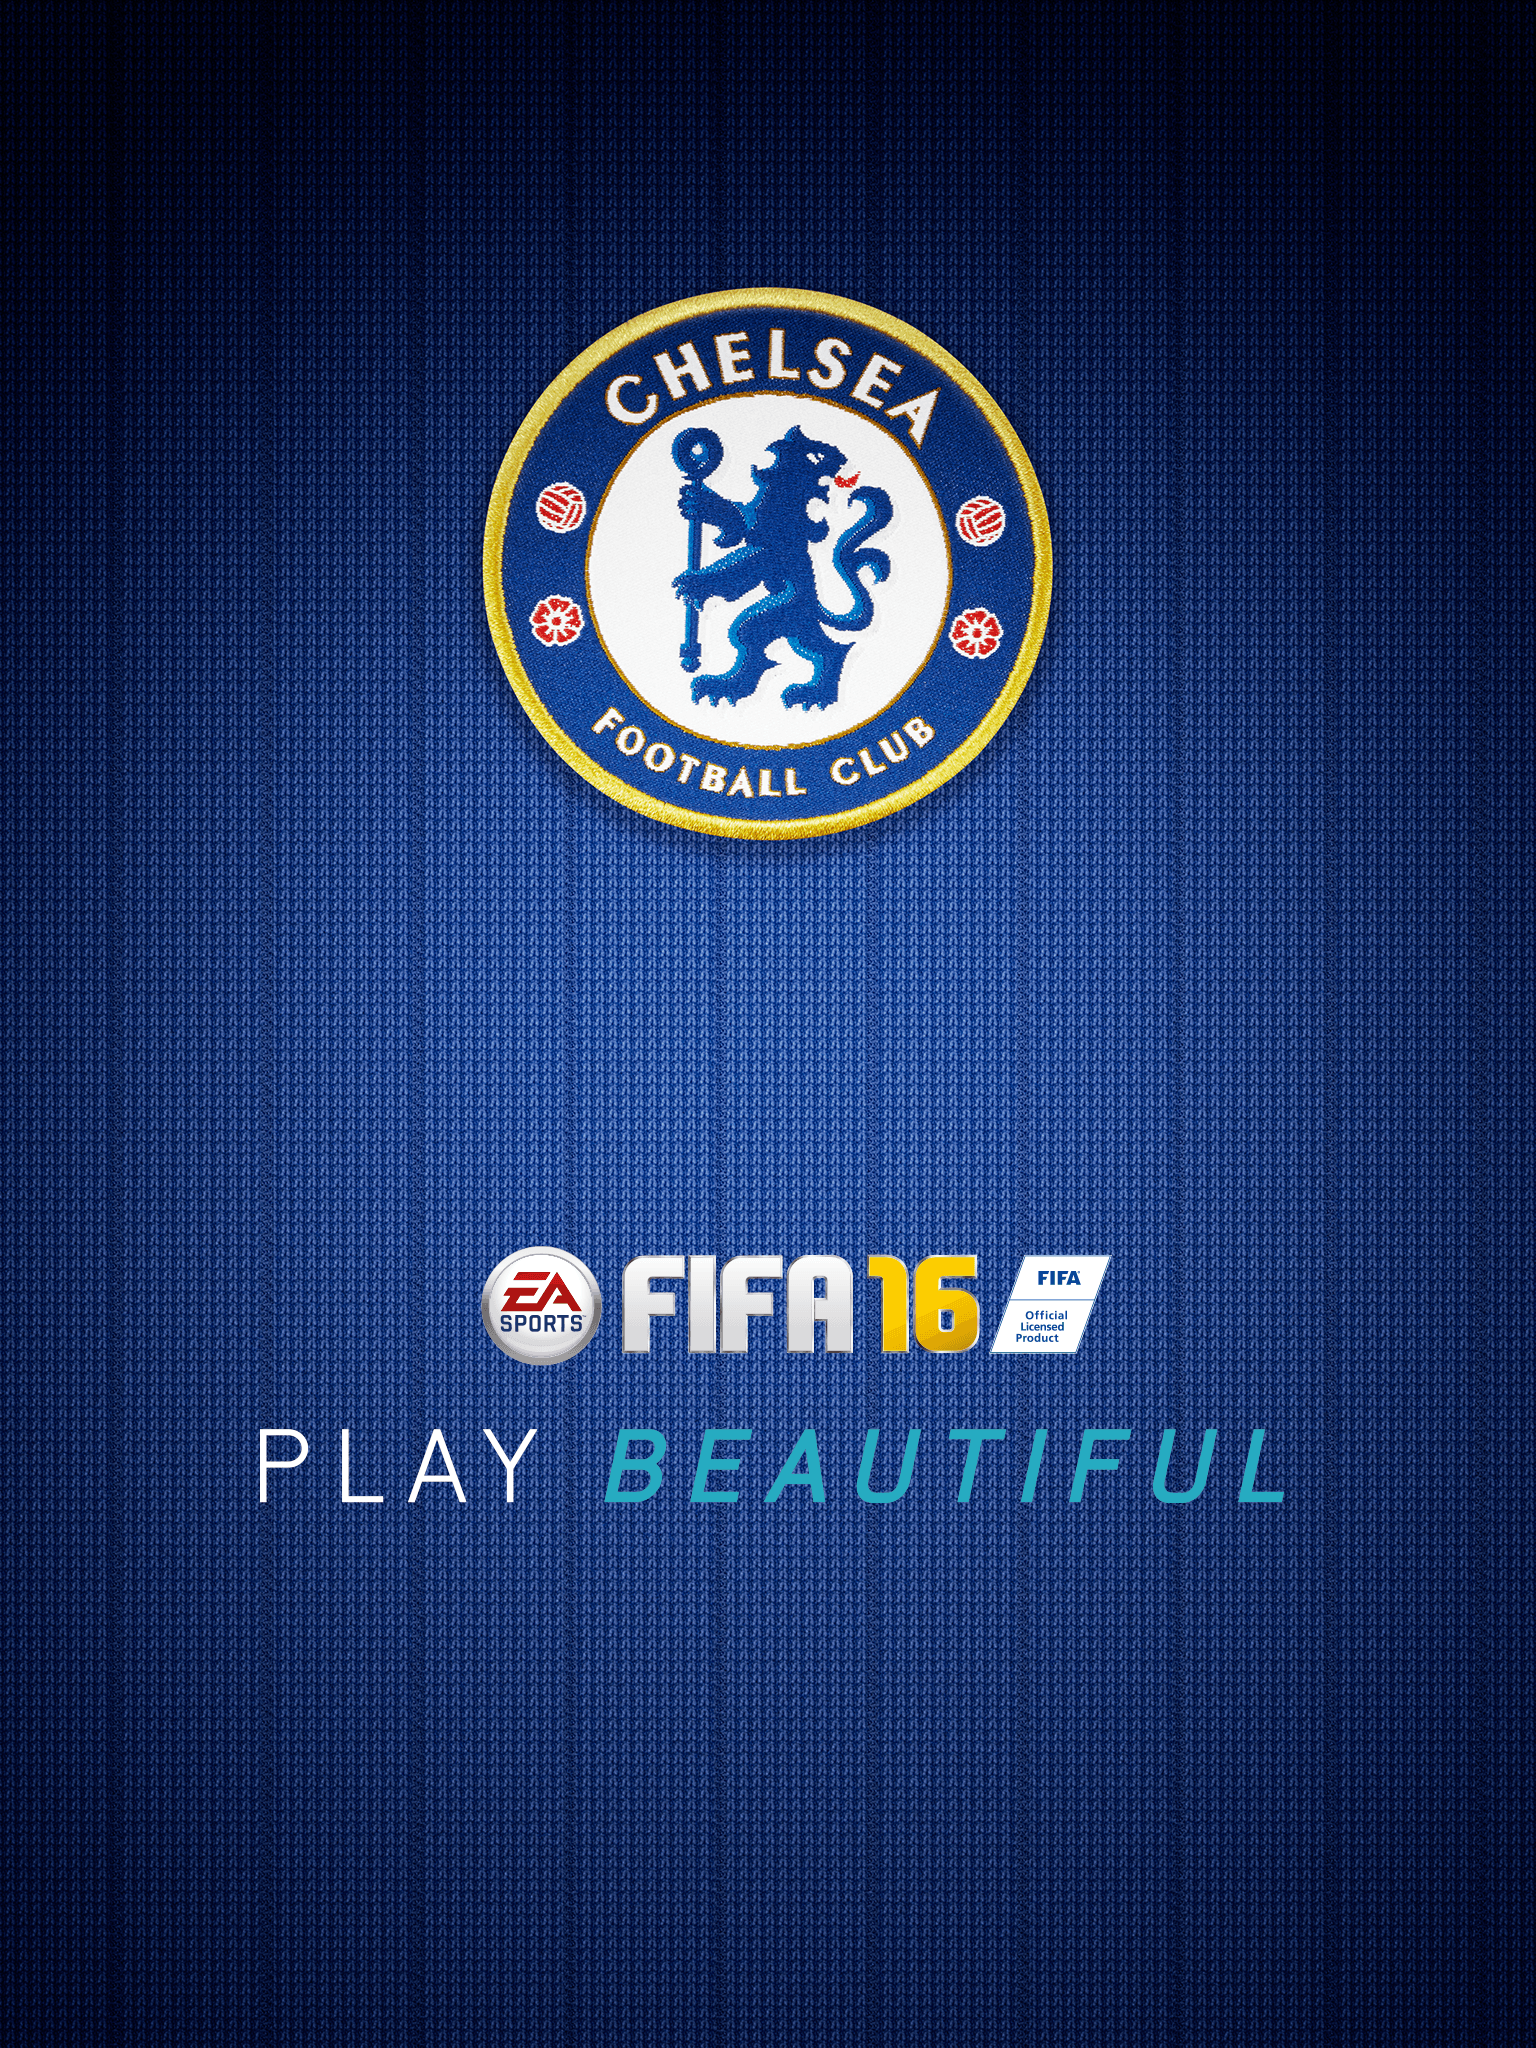 FIFA 16. Chelsea FC Club Pack